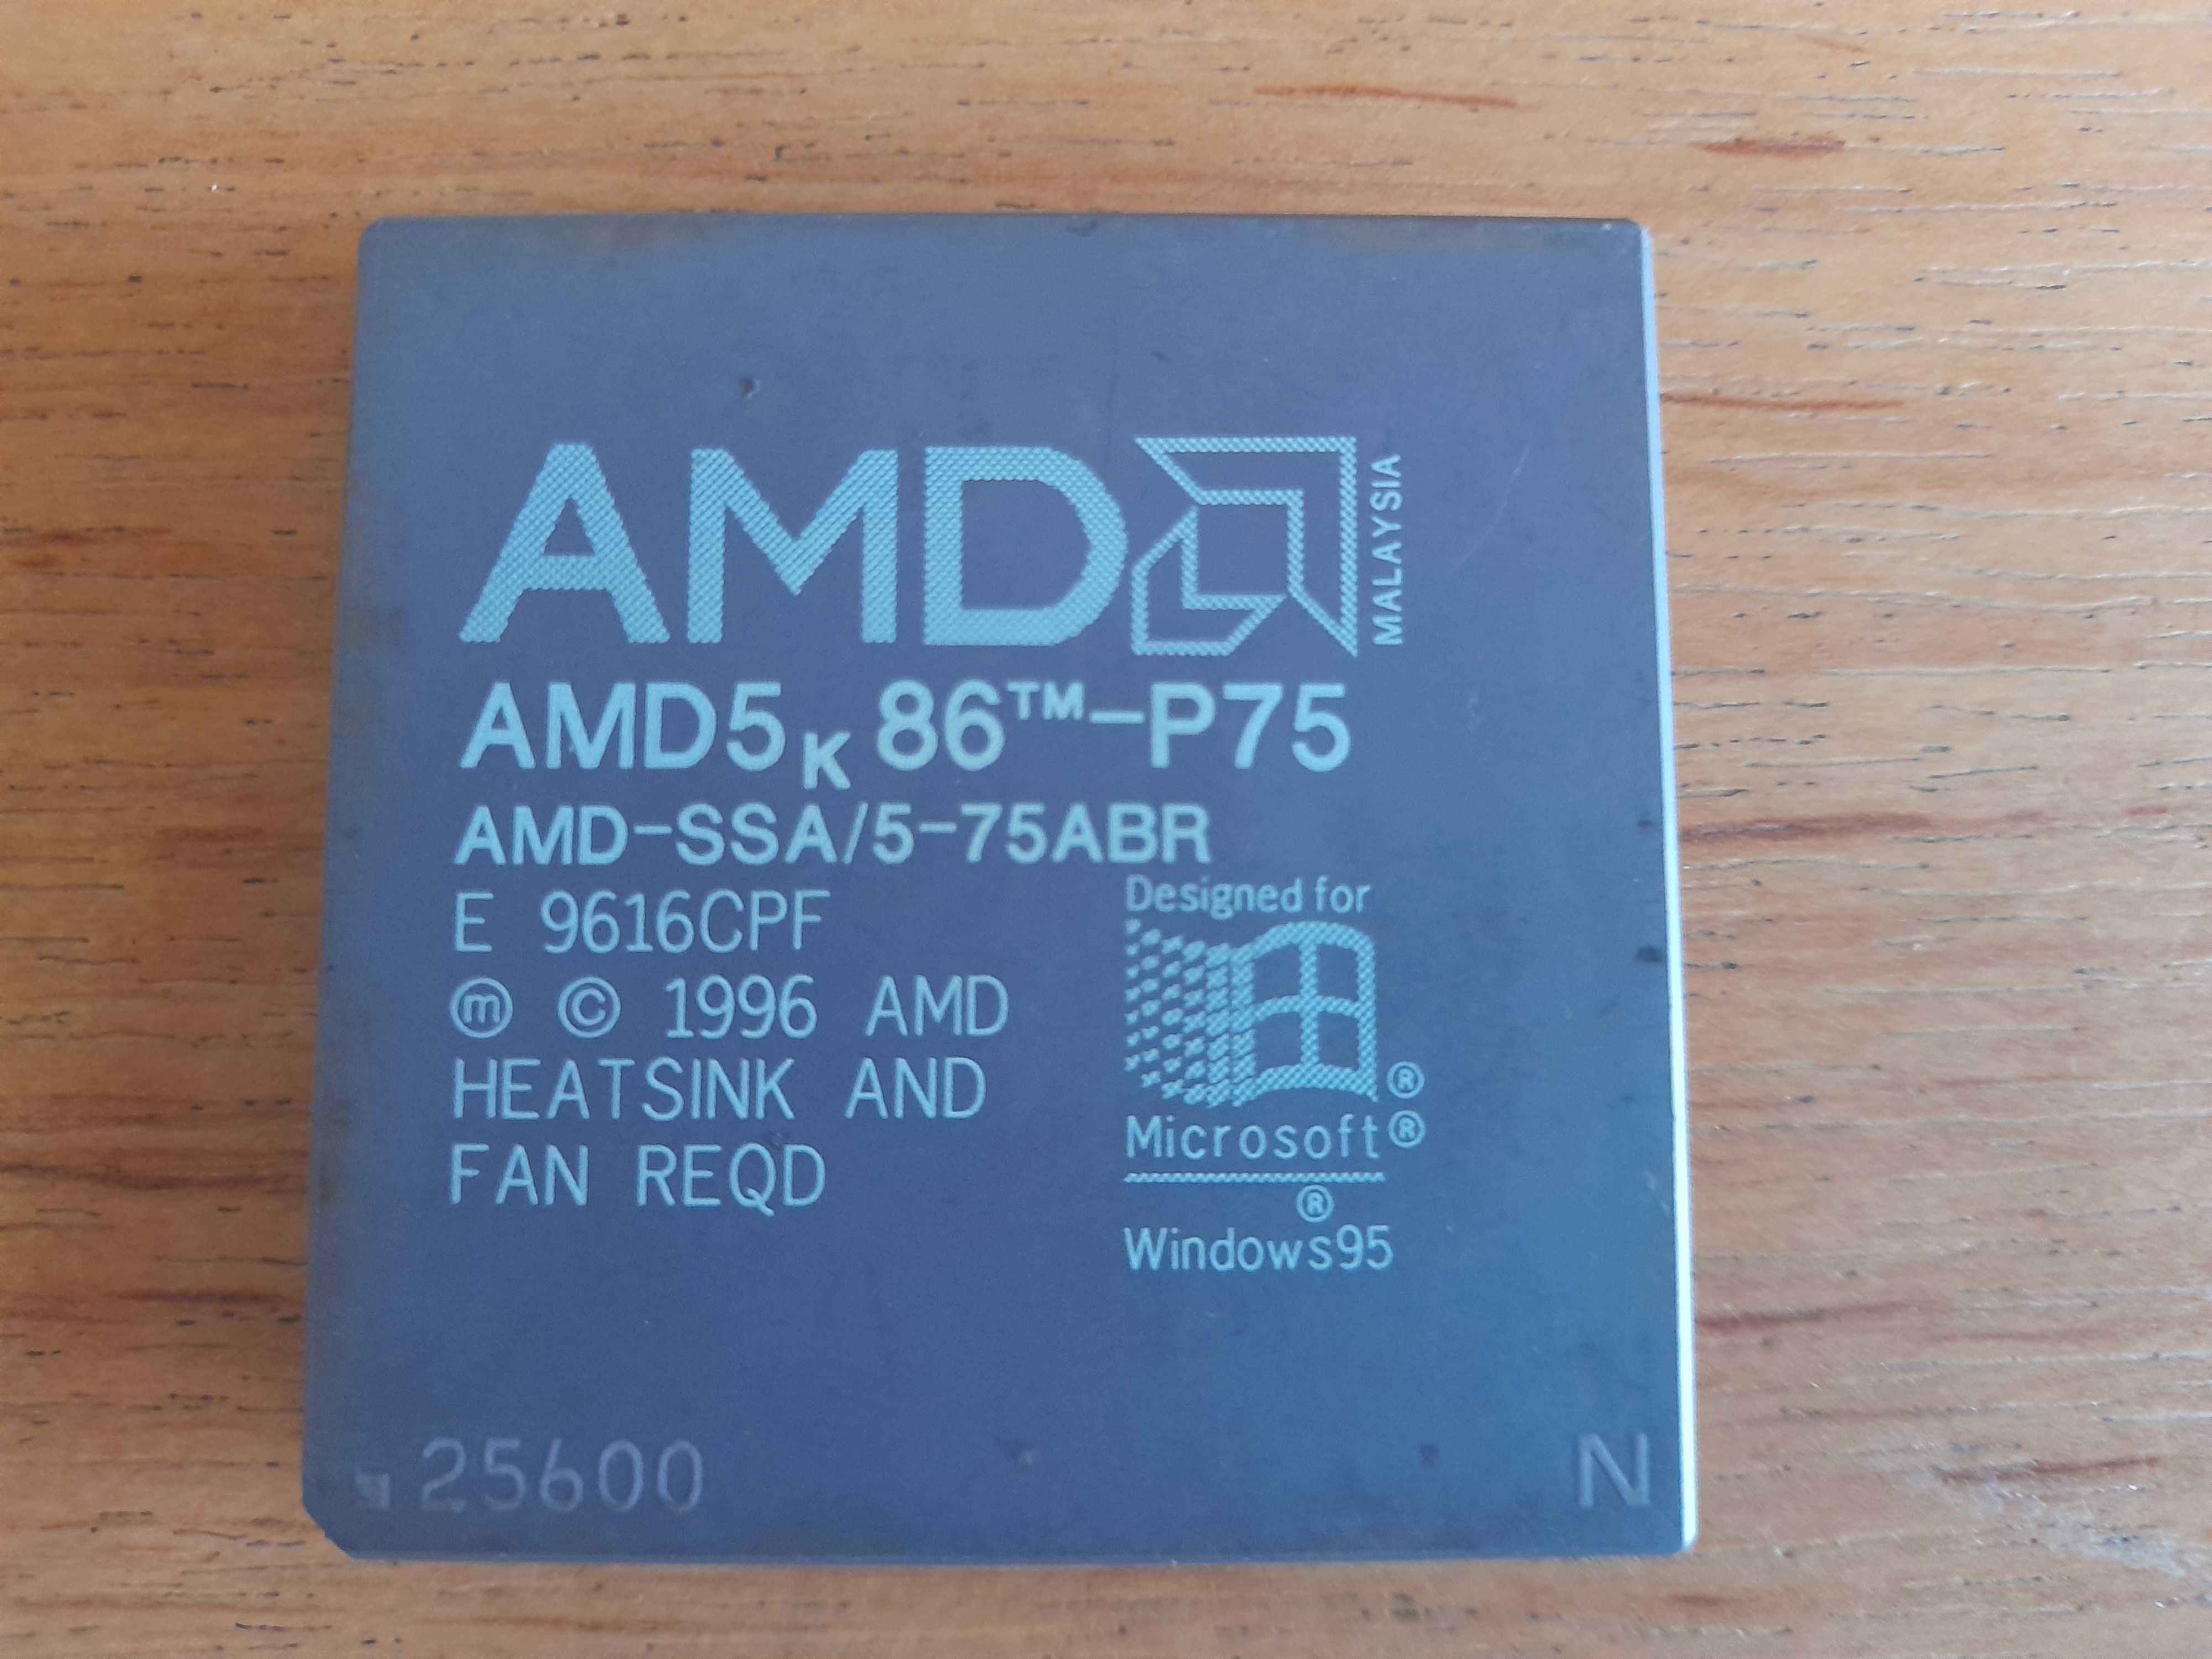 Procesor AMD 5K86 P75